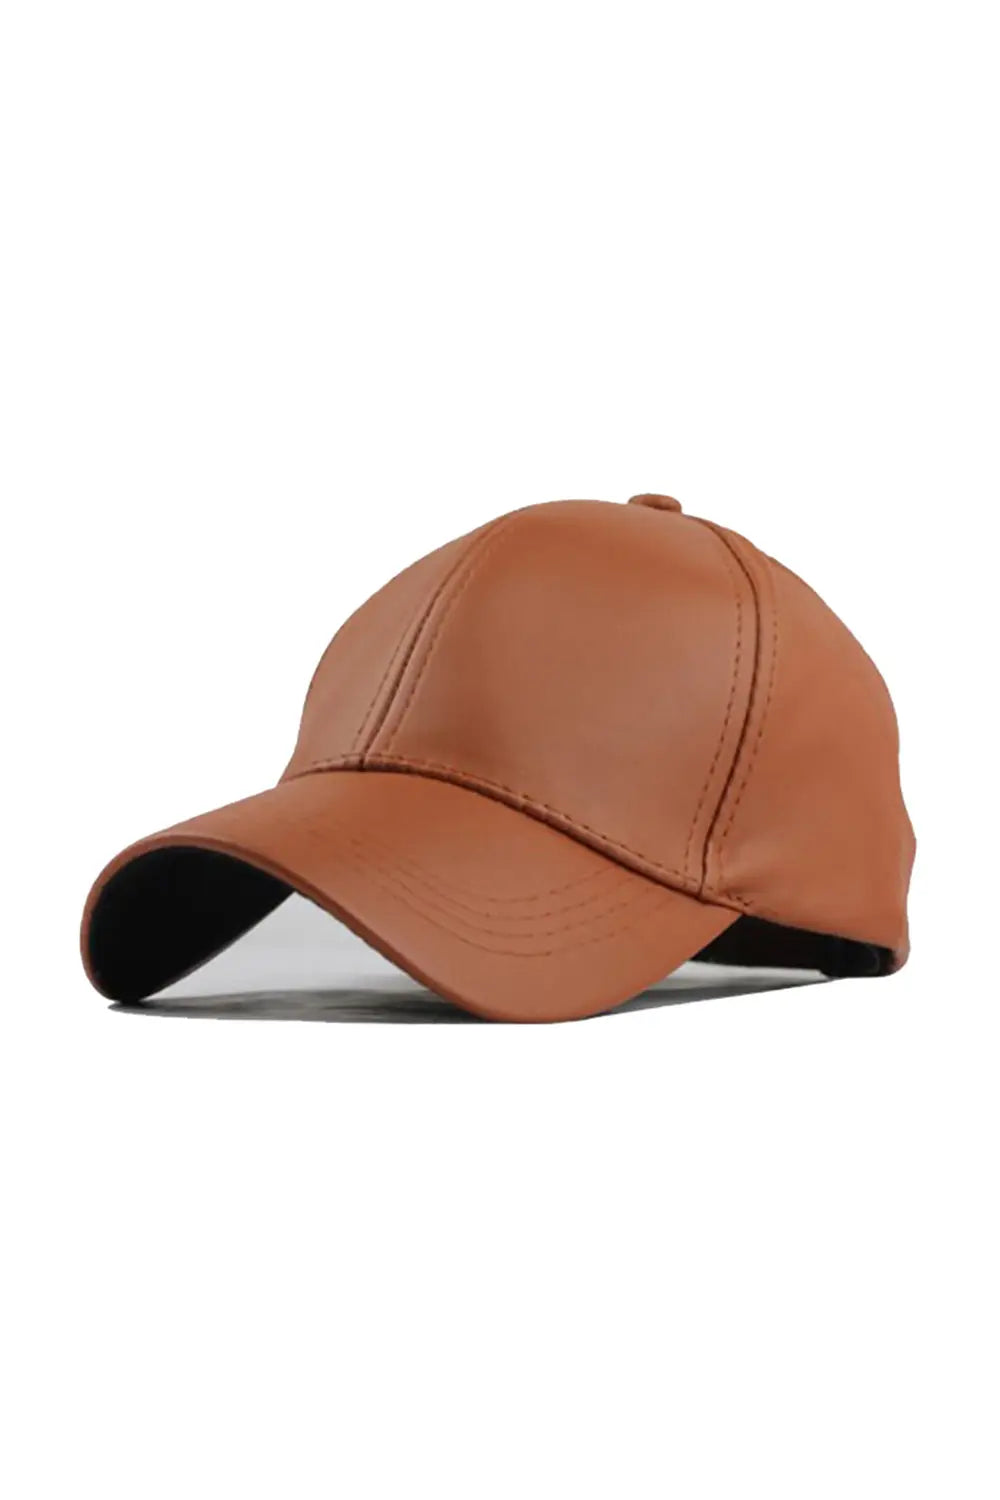 Leather Baseball Cap - Brown - Strange-Clothes